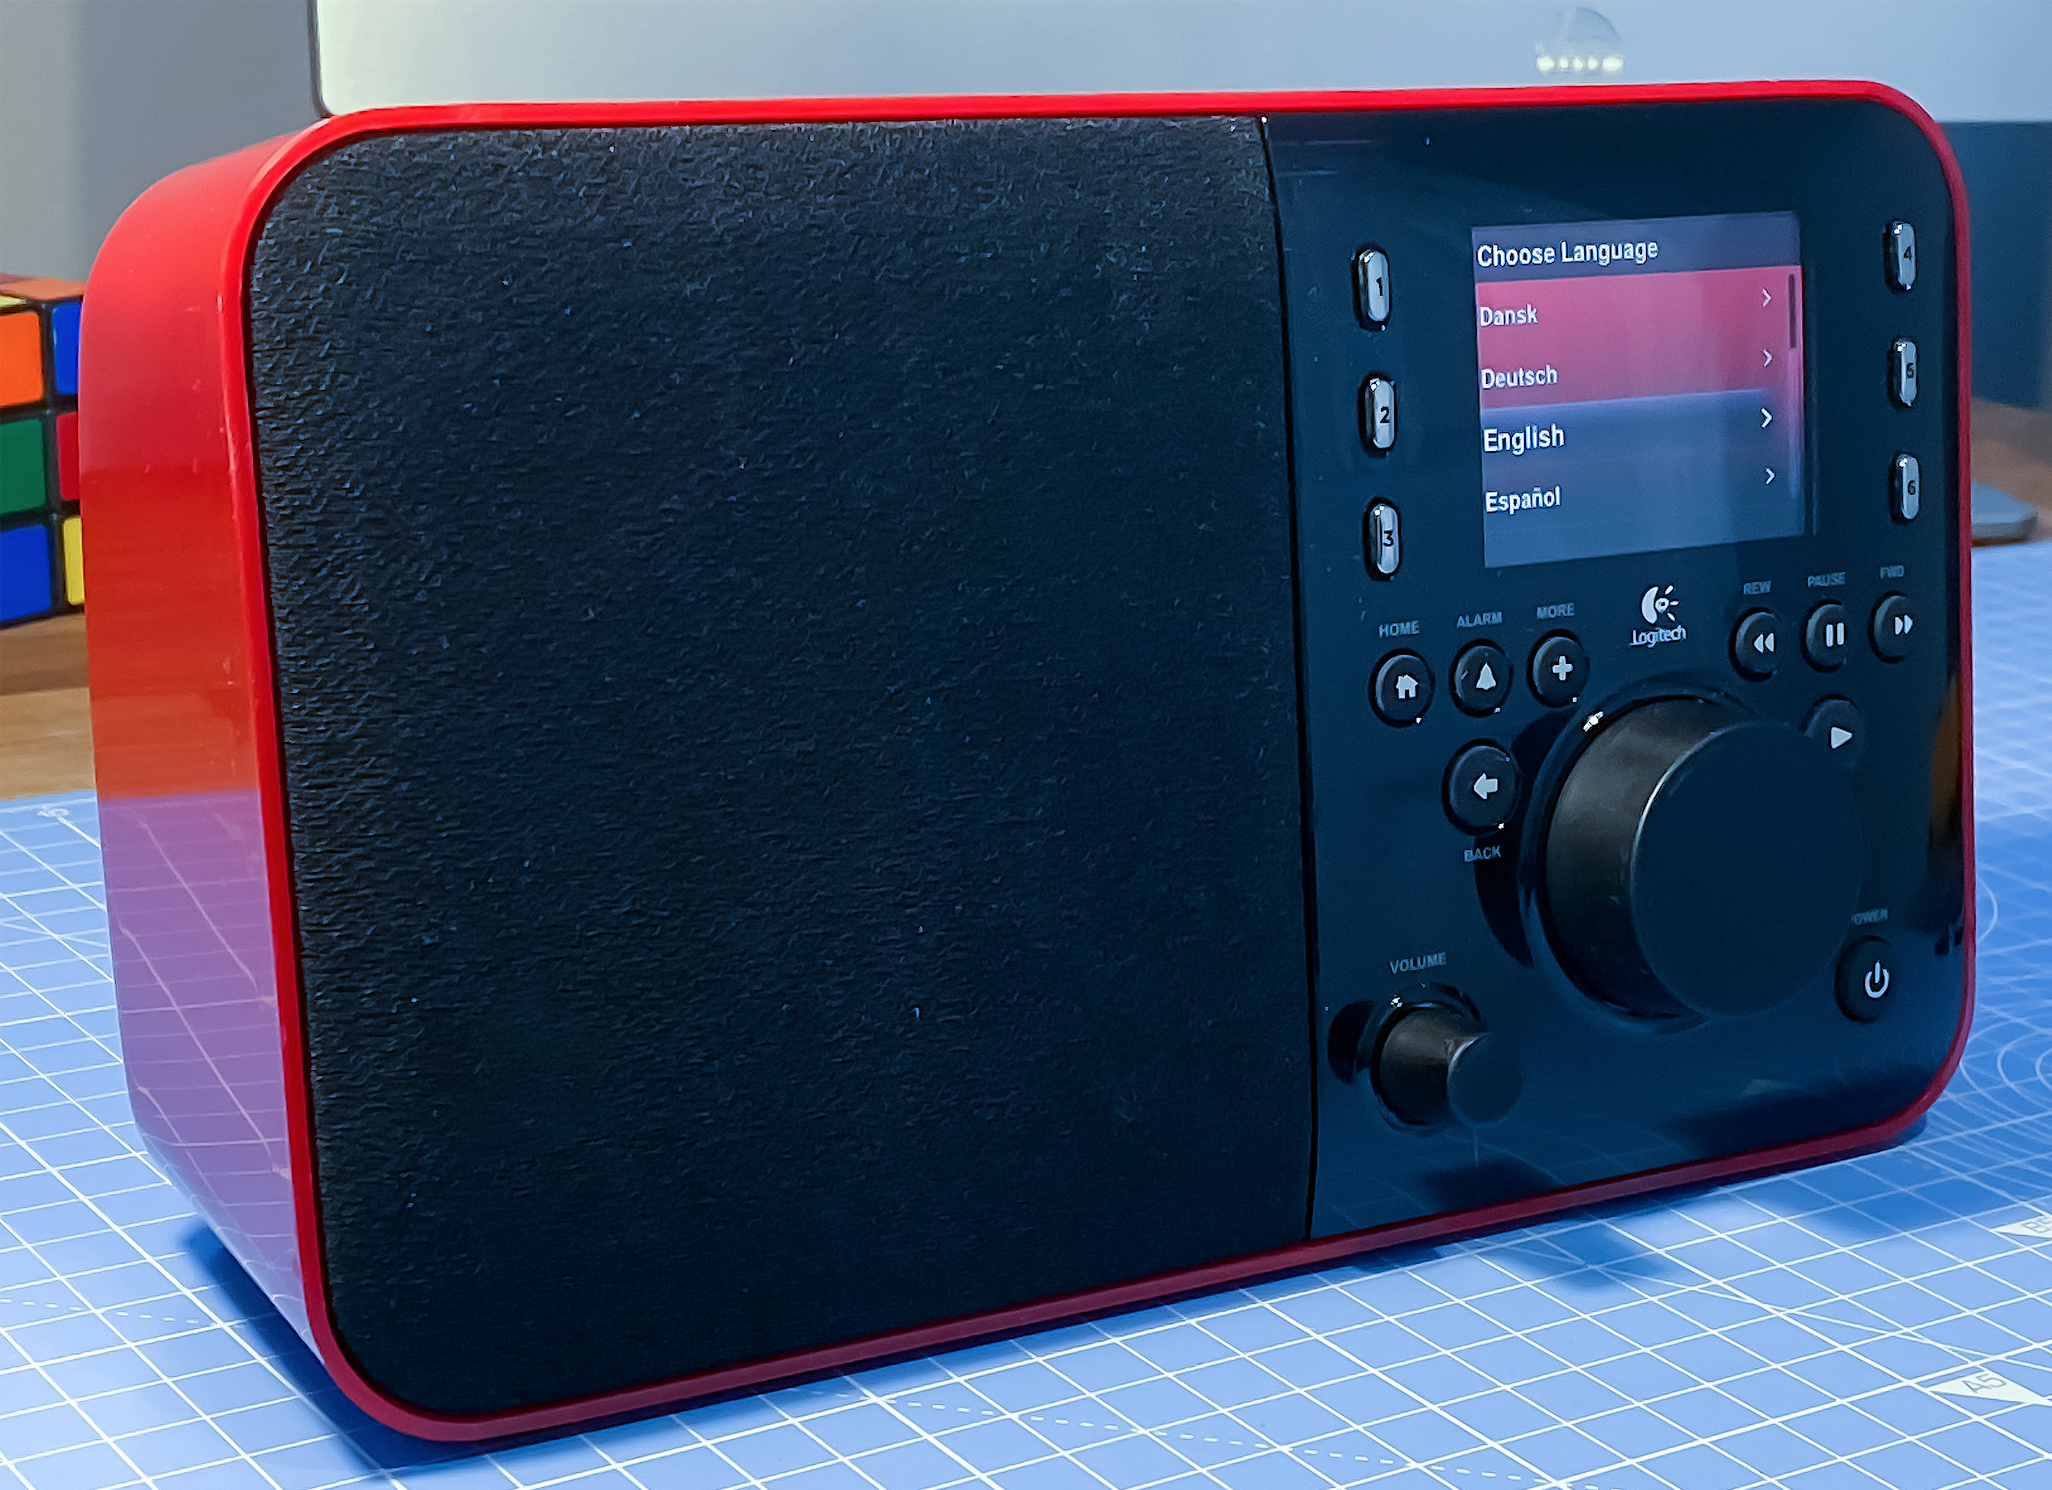 A Logitech Squeezebox Radio, in red